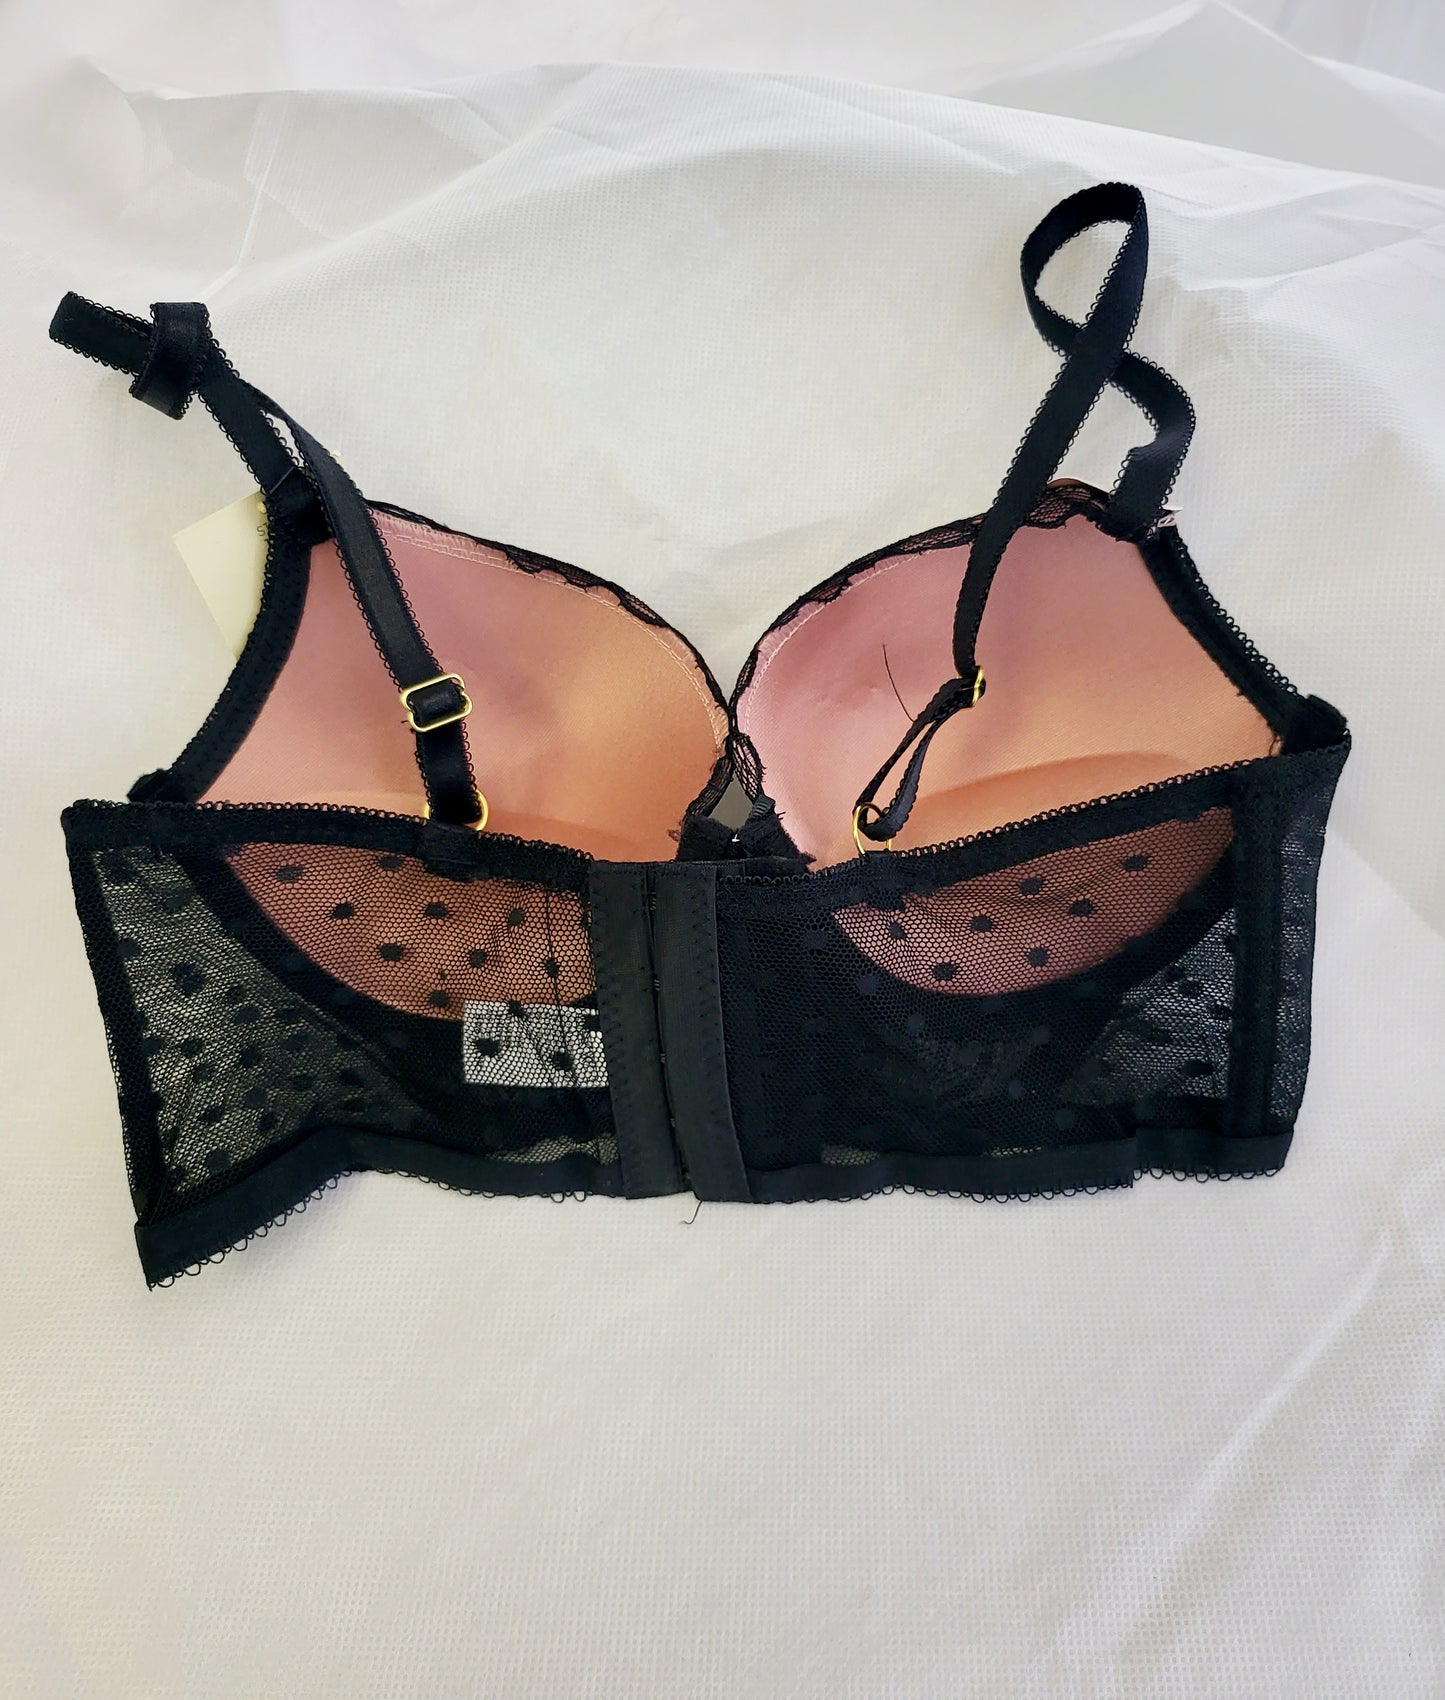 Fashion Luxe Lace Black/Nude Bra Set Matching Lace Thong